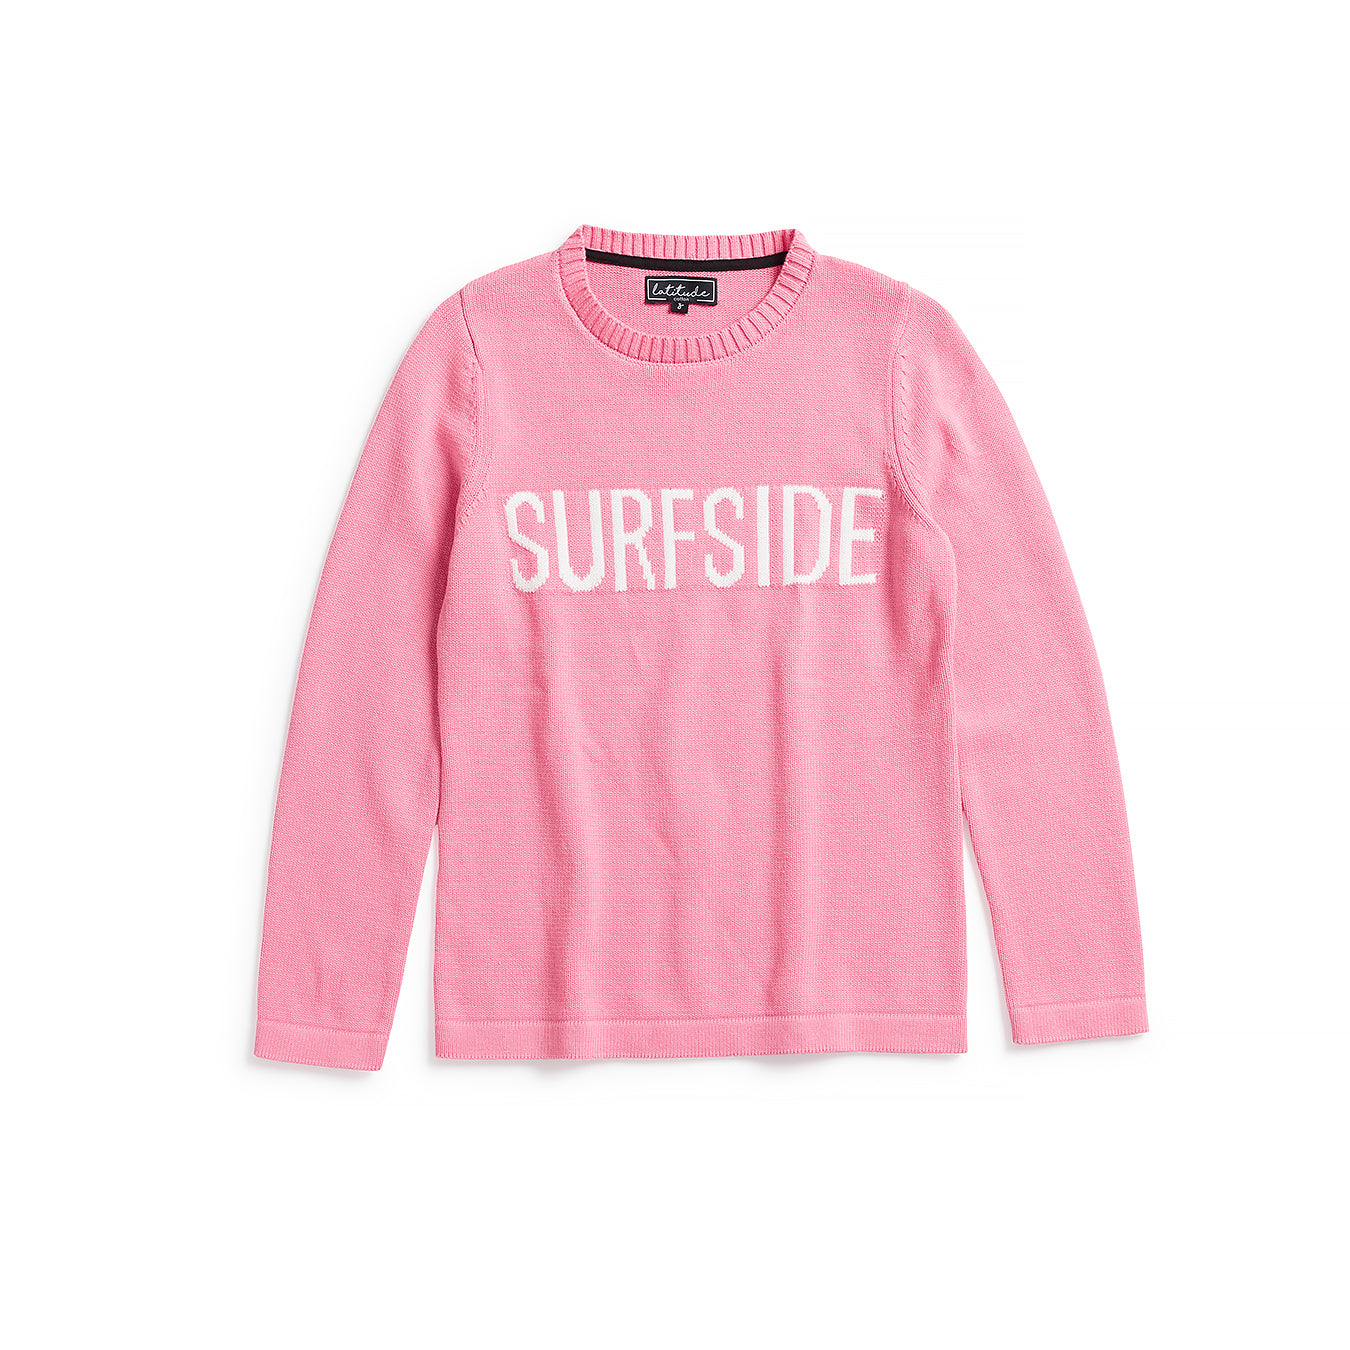 Latitude Clothing Surfside Sweater - Bright Pink/White